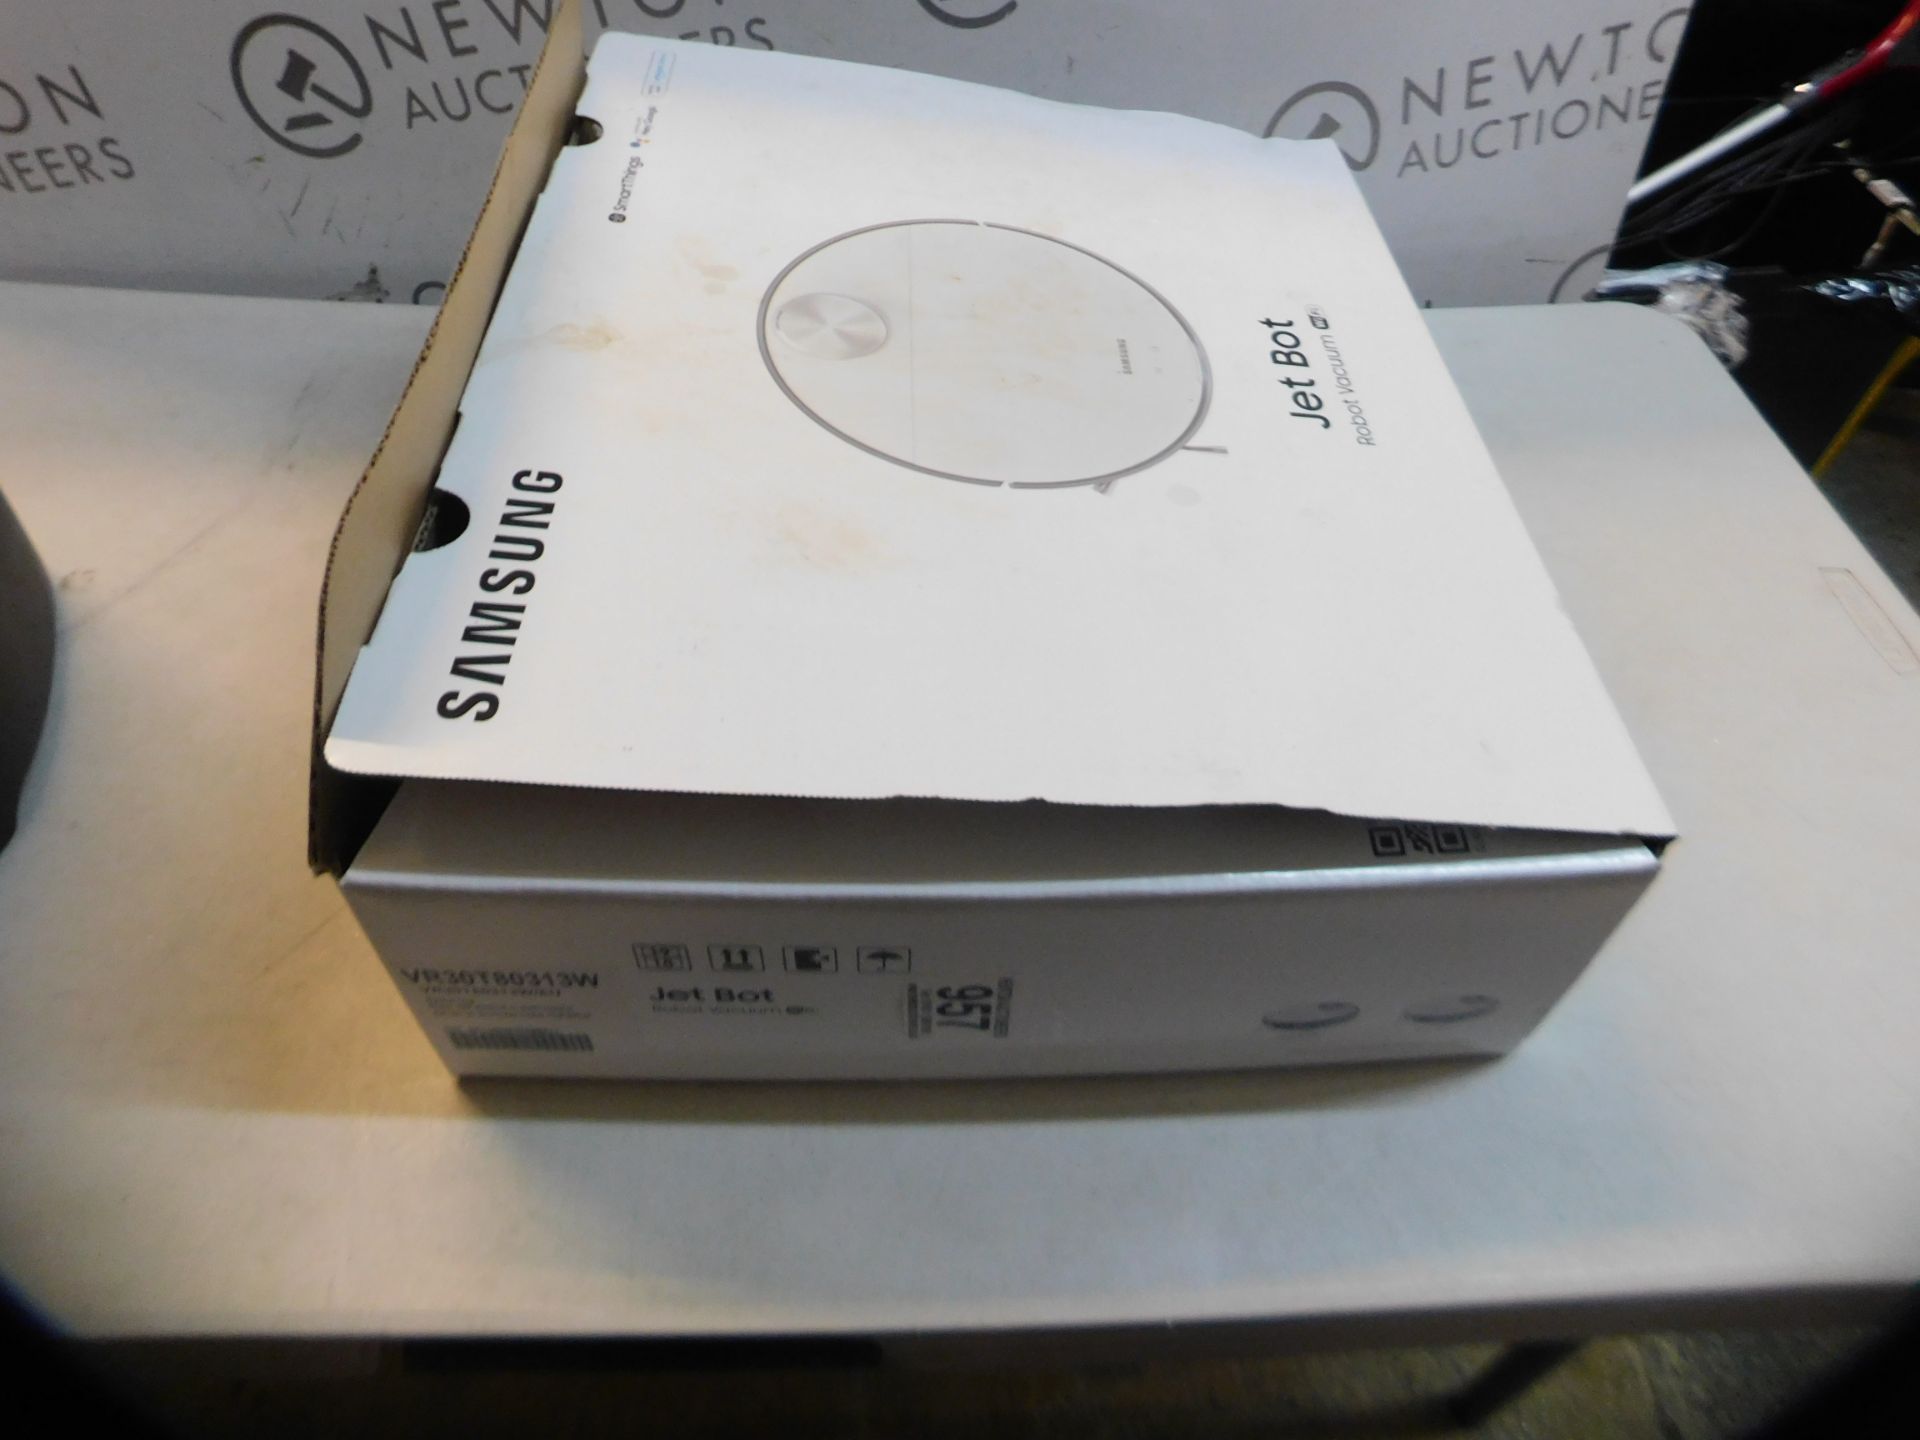 1 BOXED SAMSUNG JET BOT VR30T80313W/EU ROBOT VACUUM CLEANER WITH LIDAR SENSOR RRP Â£599.99